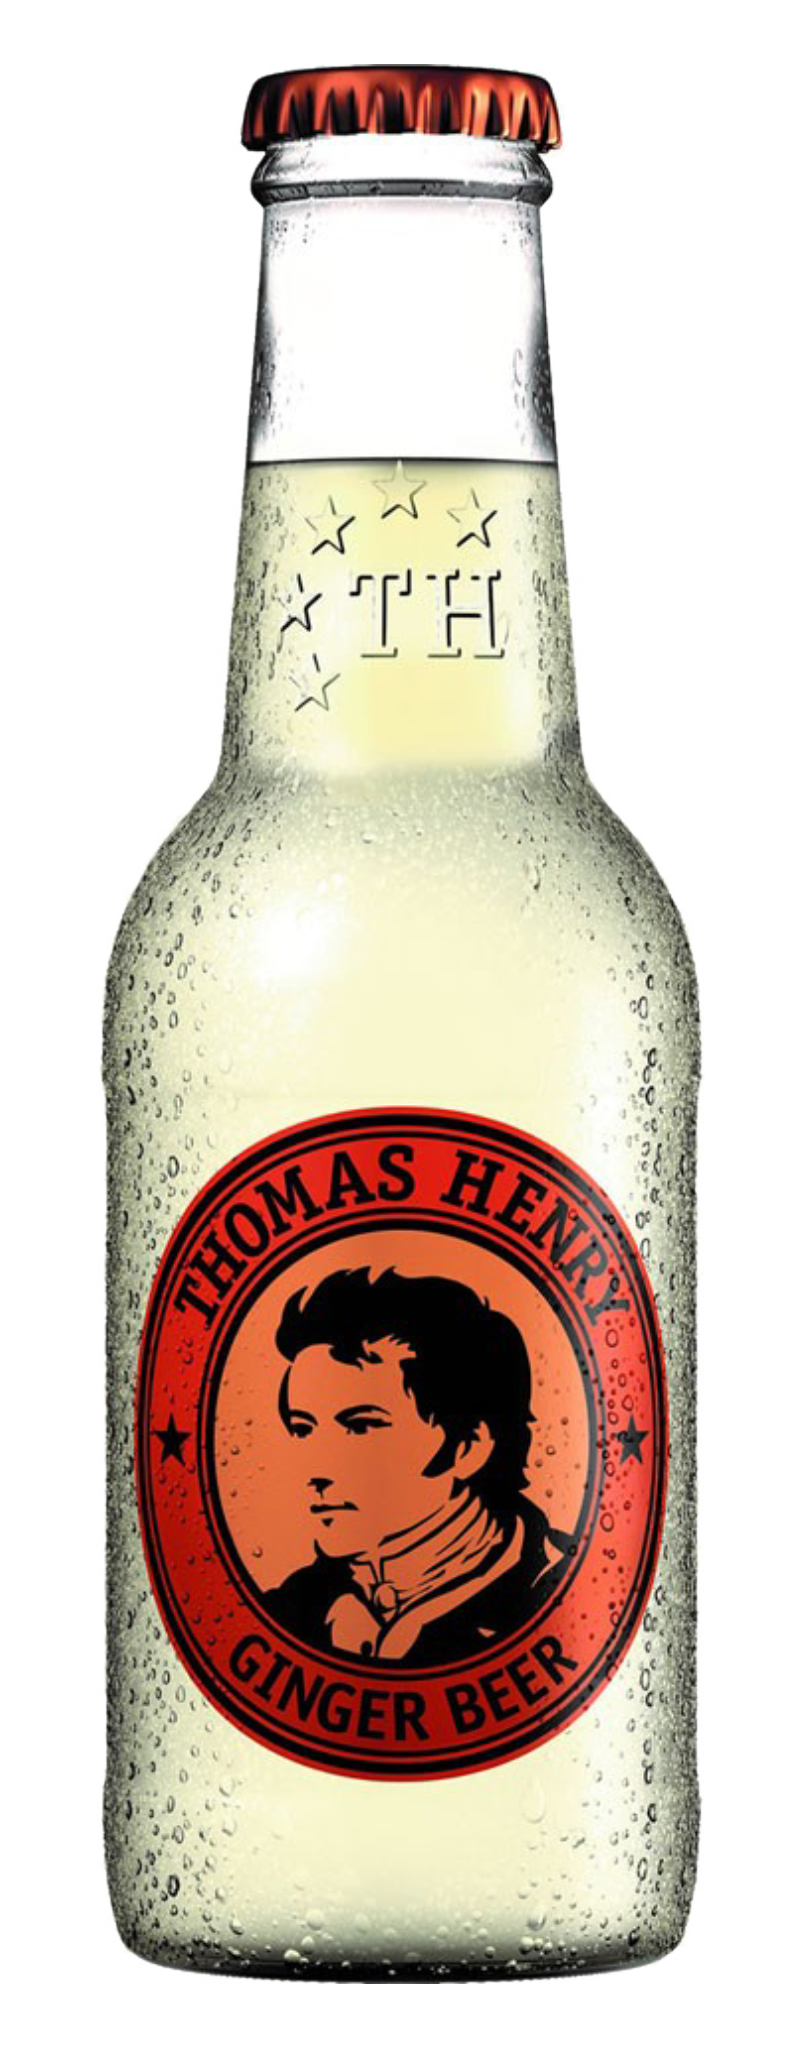 Thomas Henry Ginger Beer (thùng 24 chai)  - 200ml